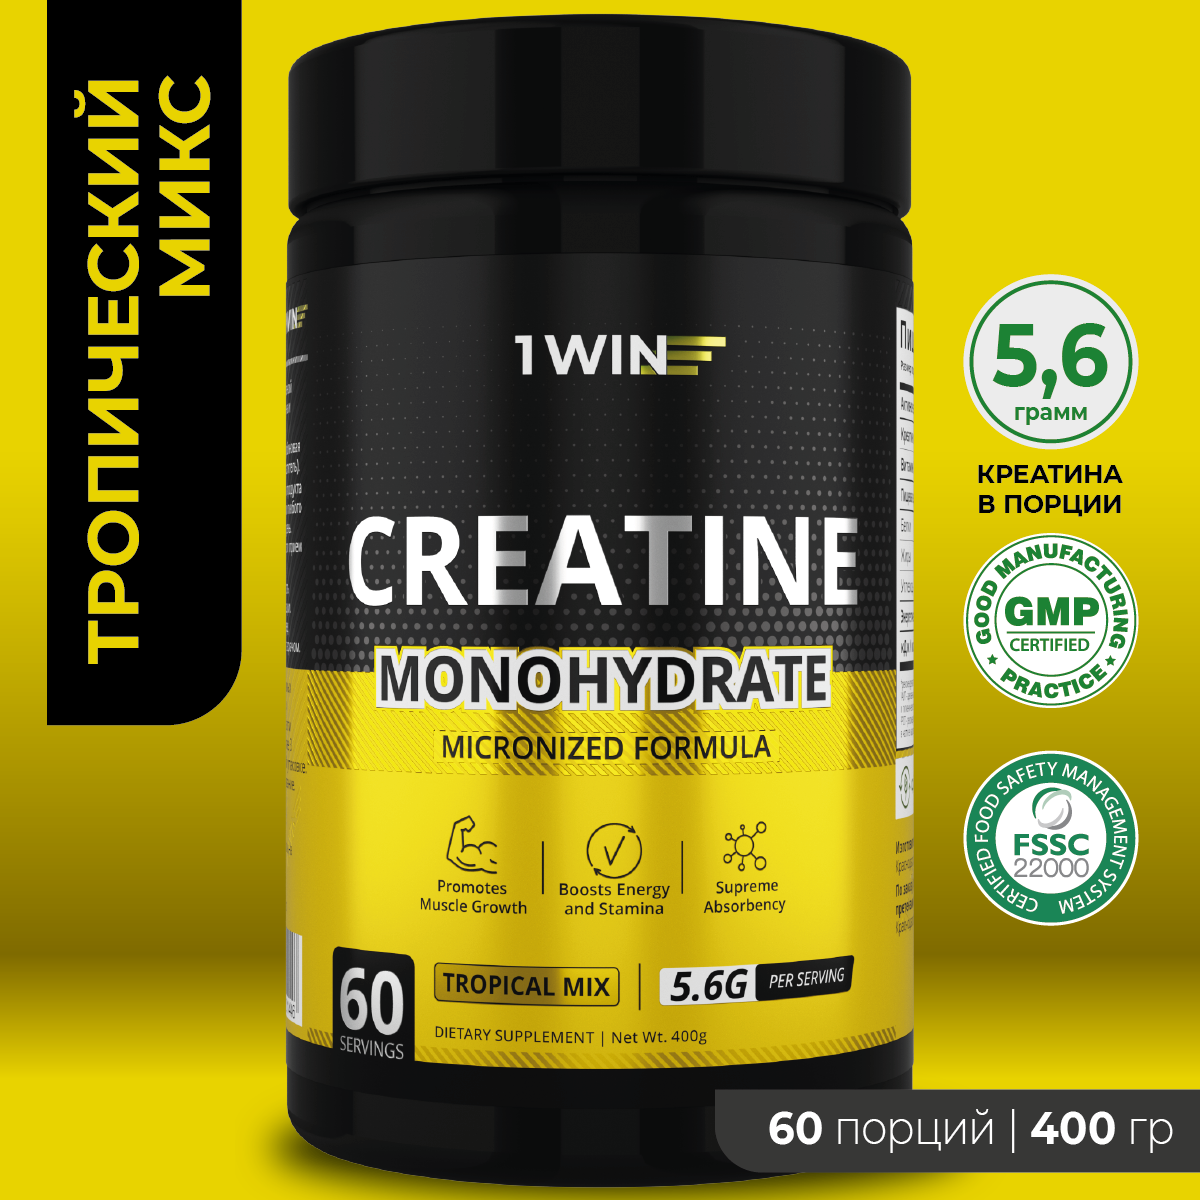    1WIN, Creatine Monohydrate,  , 60 ,      